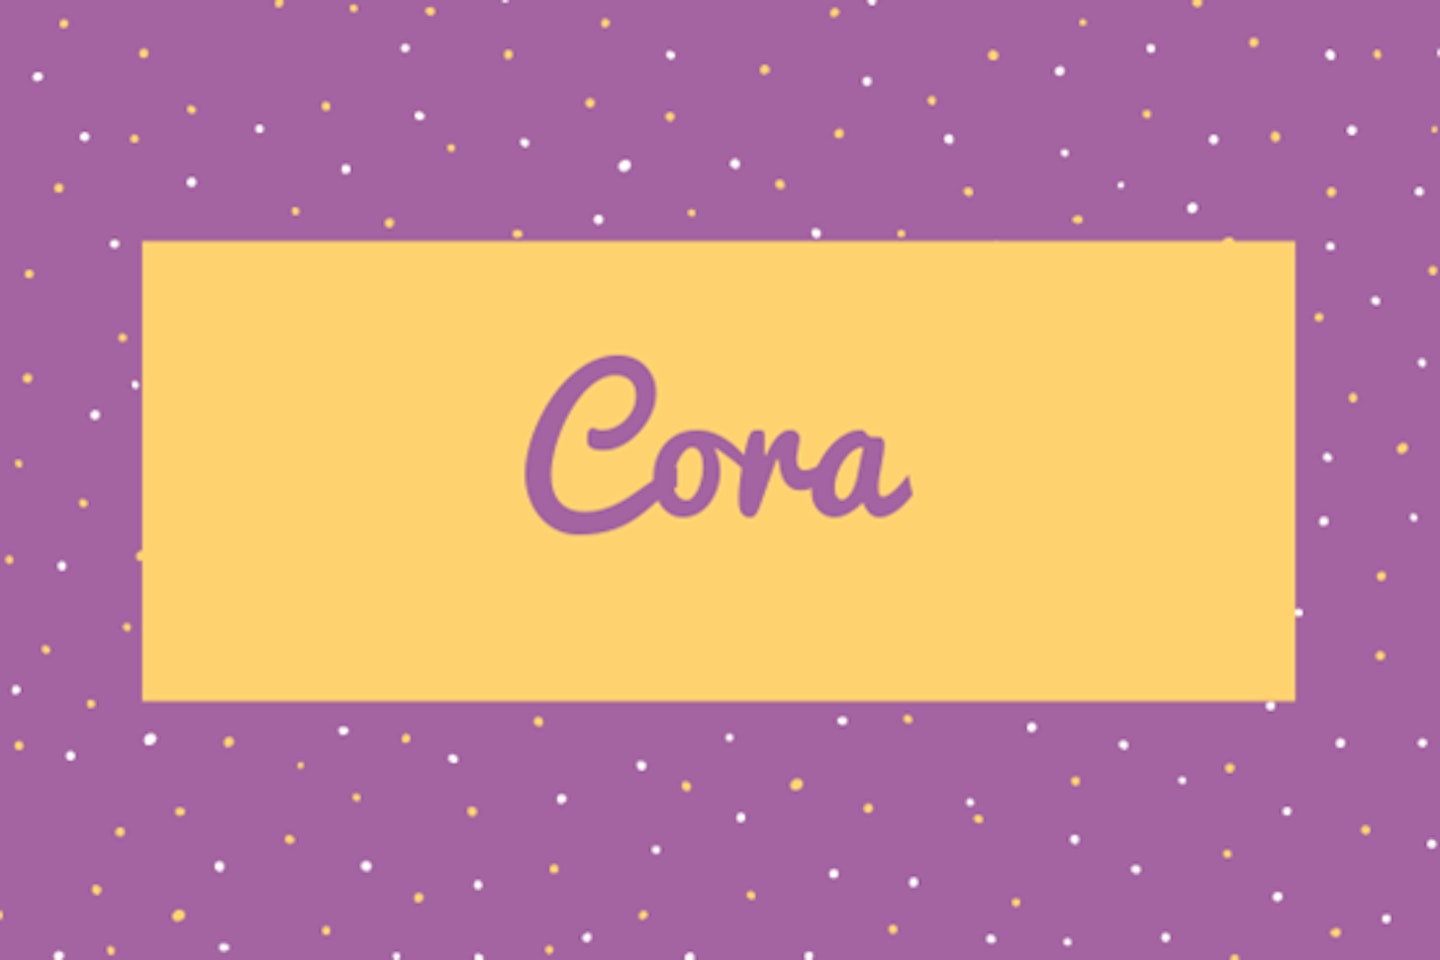 11) Cora